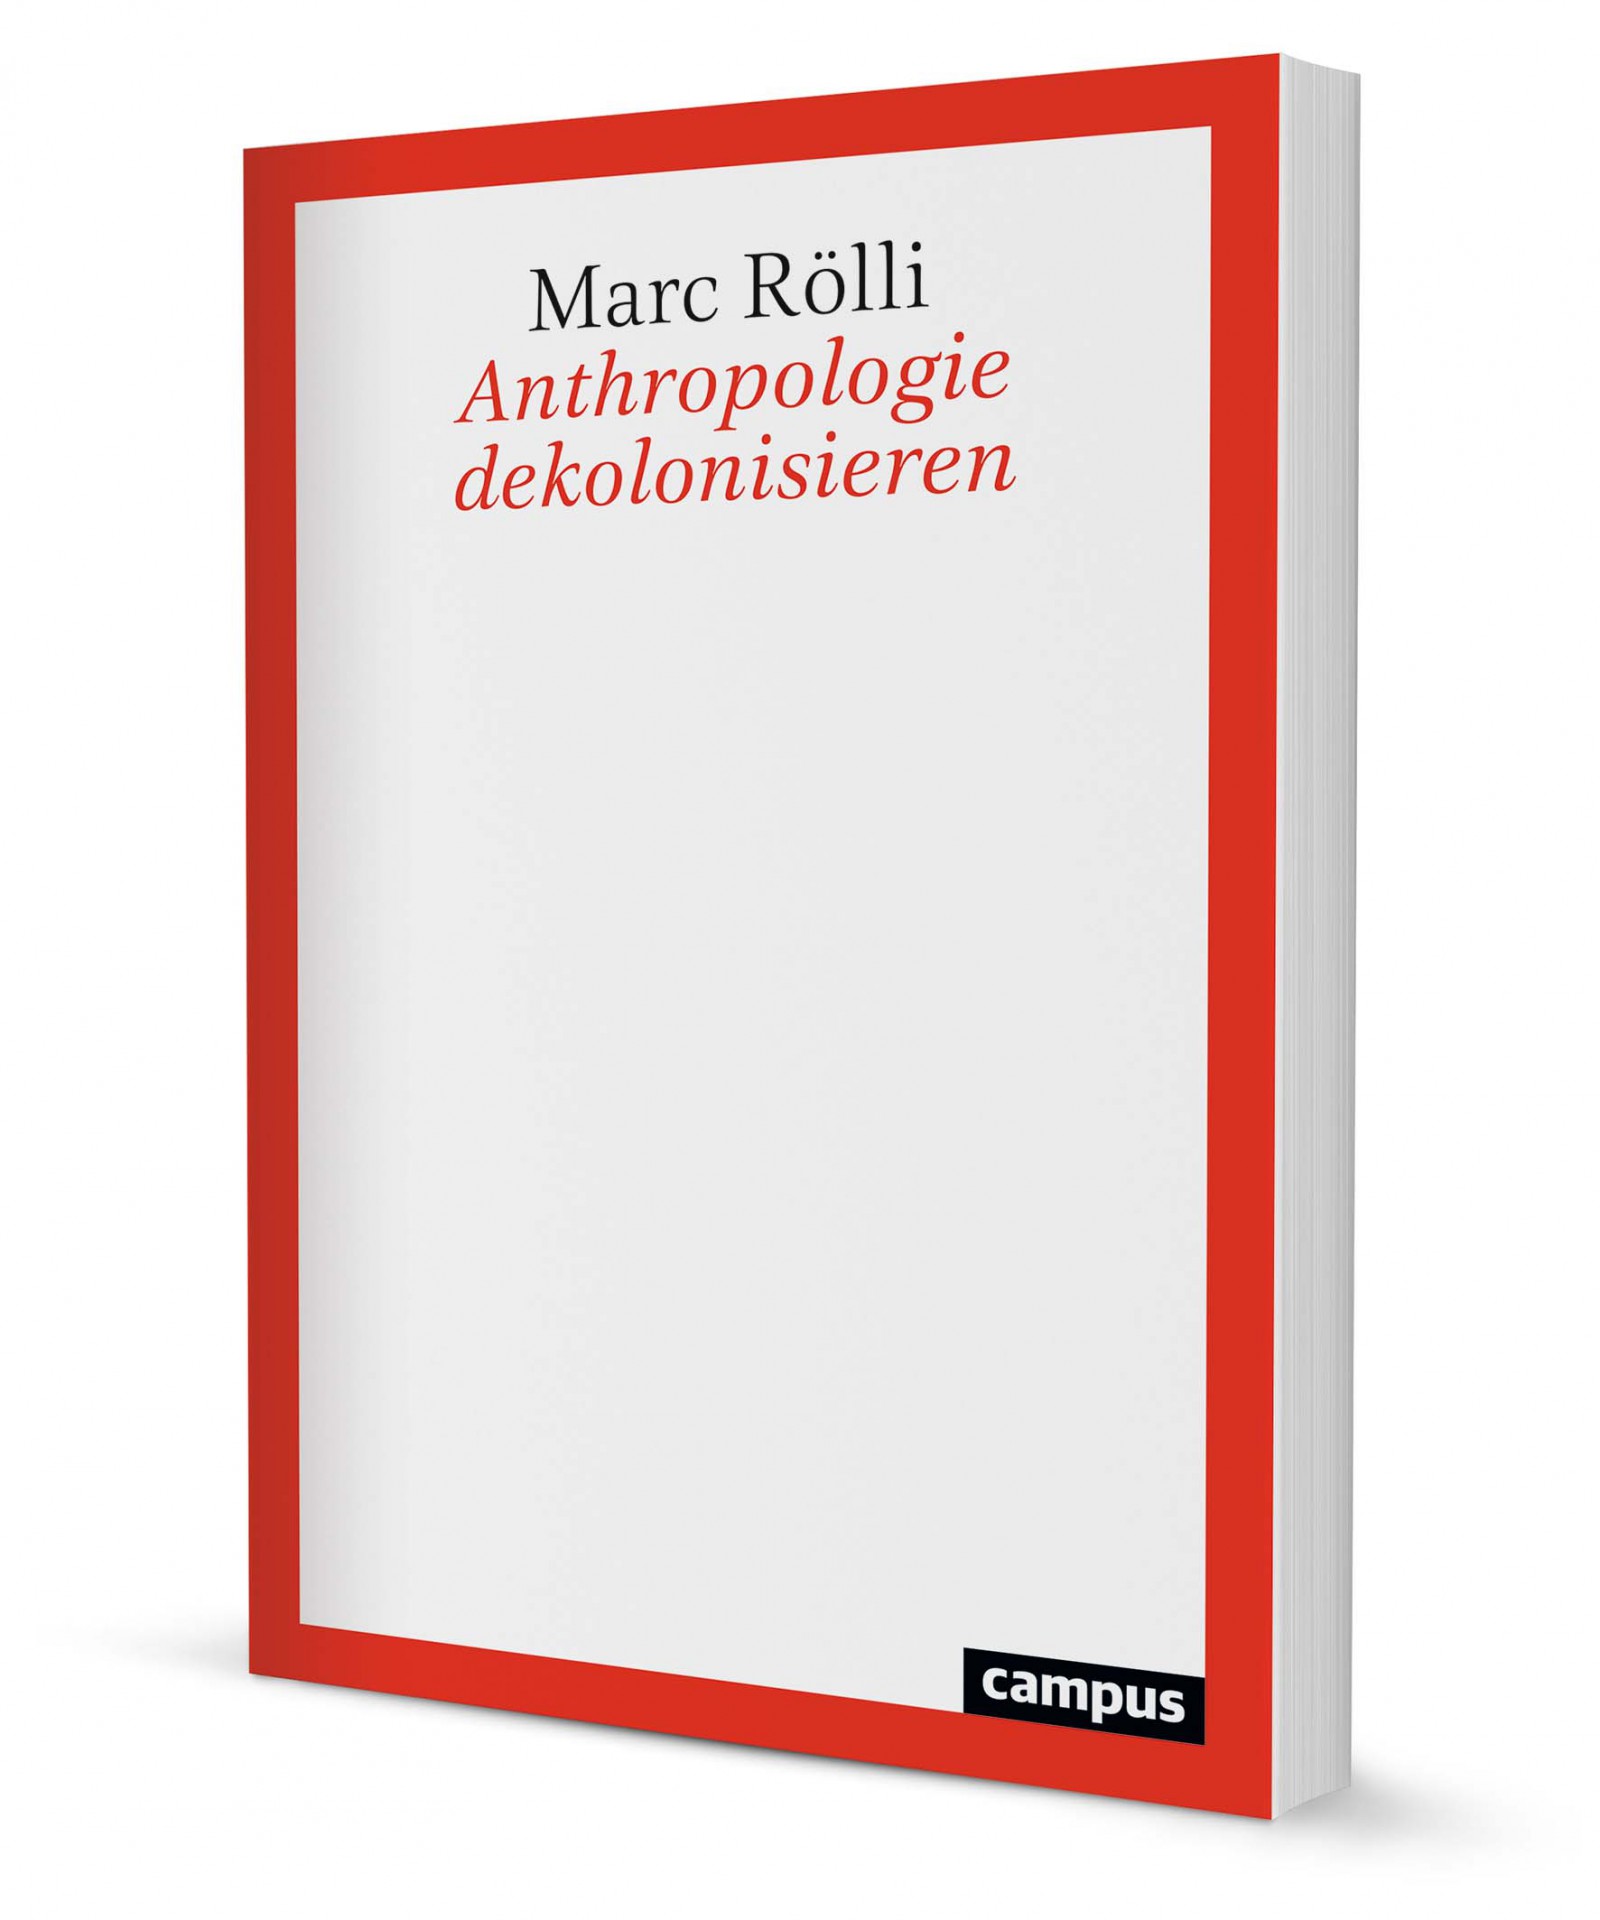 "Decolonizing Anthropology" by Marc Rölli at Campus-Verlag